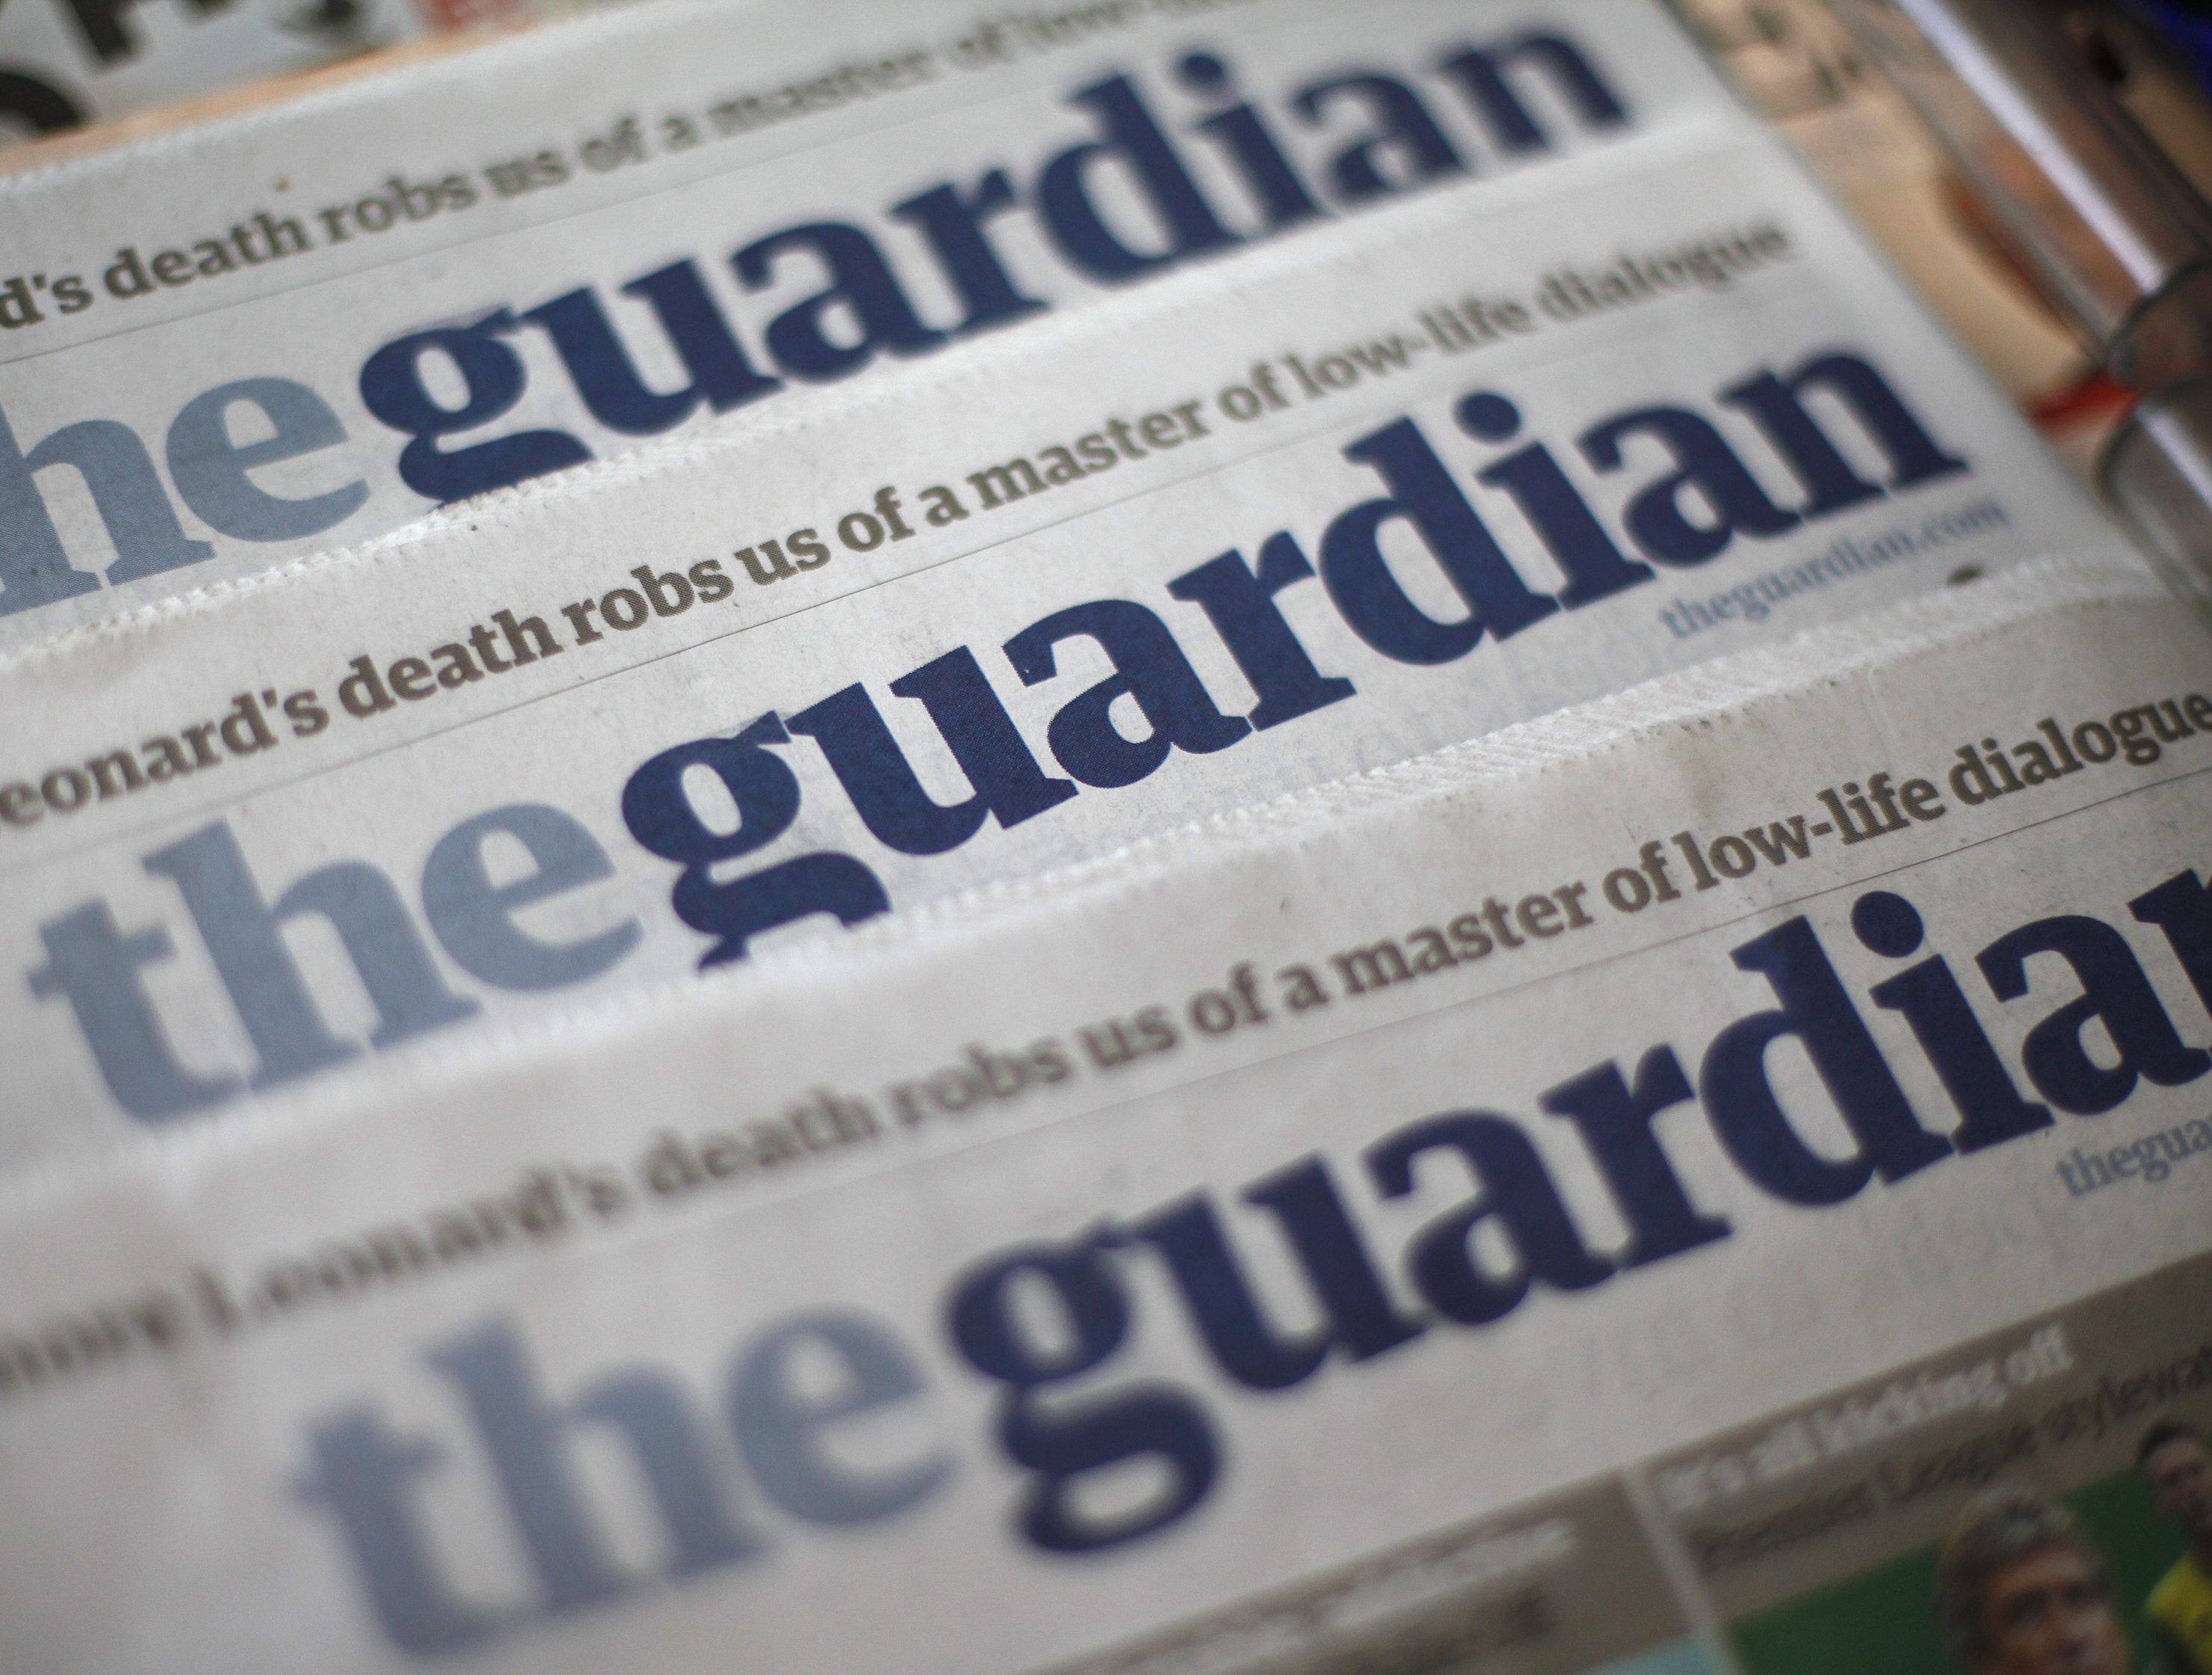 The Guardian newspaper